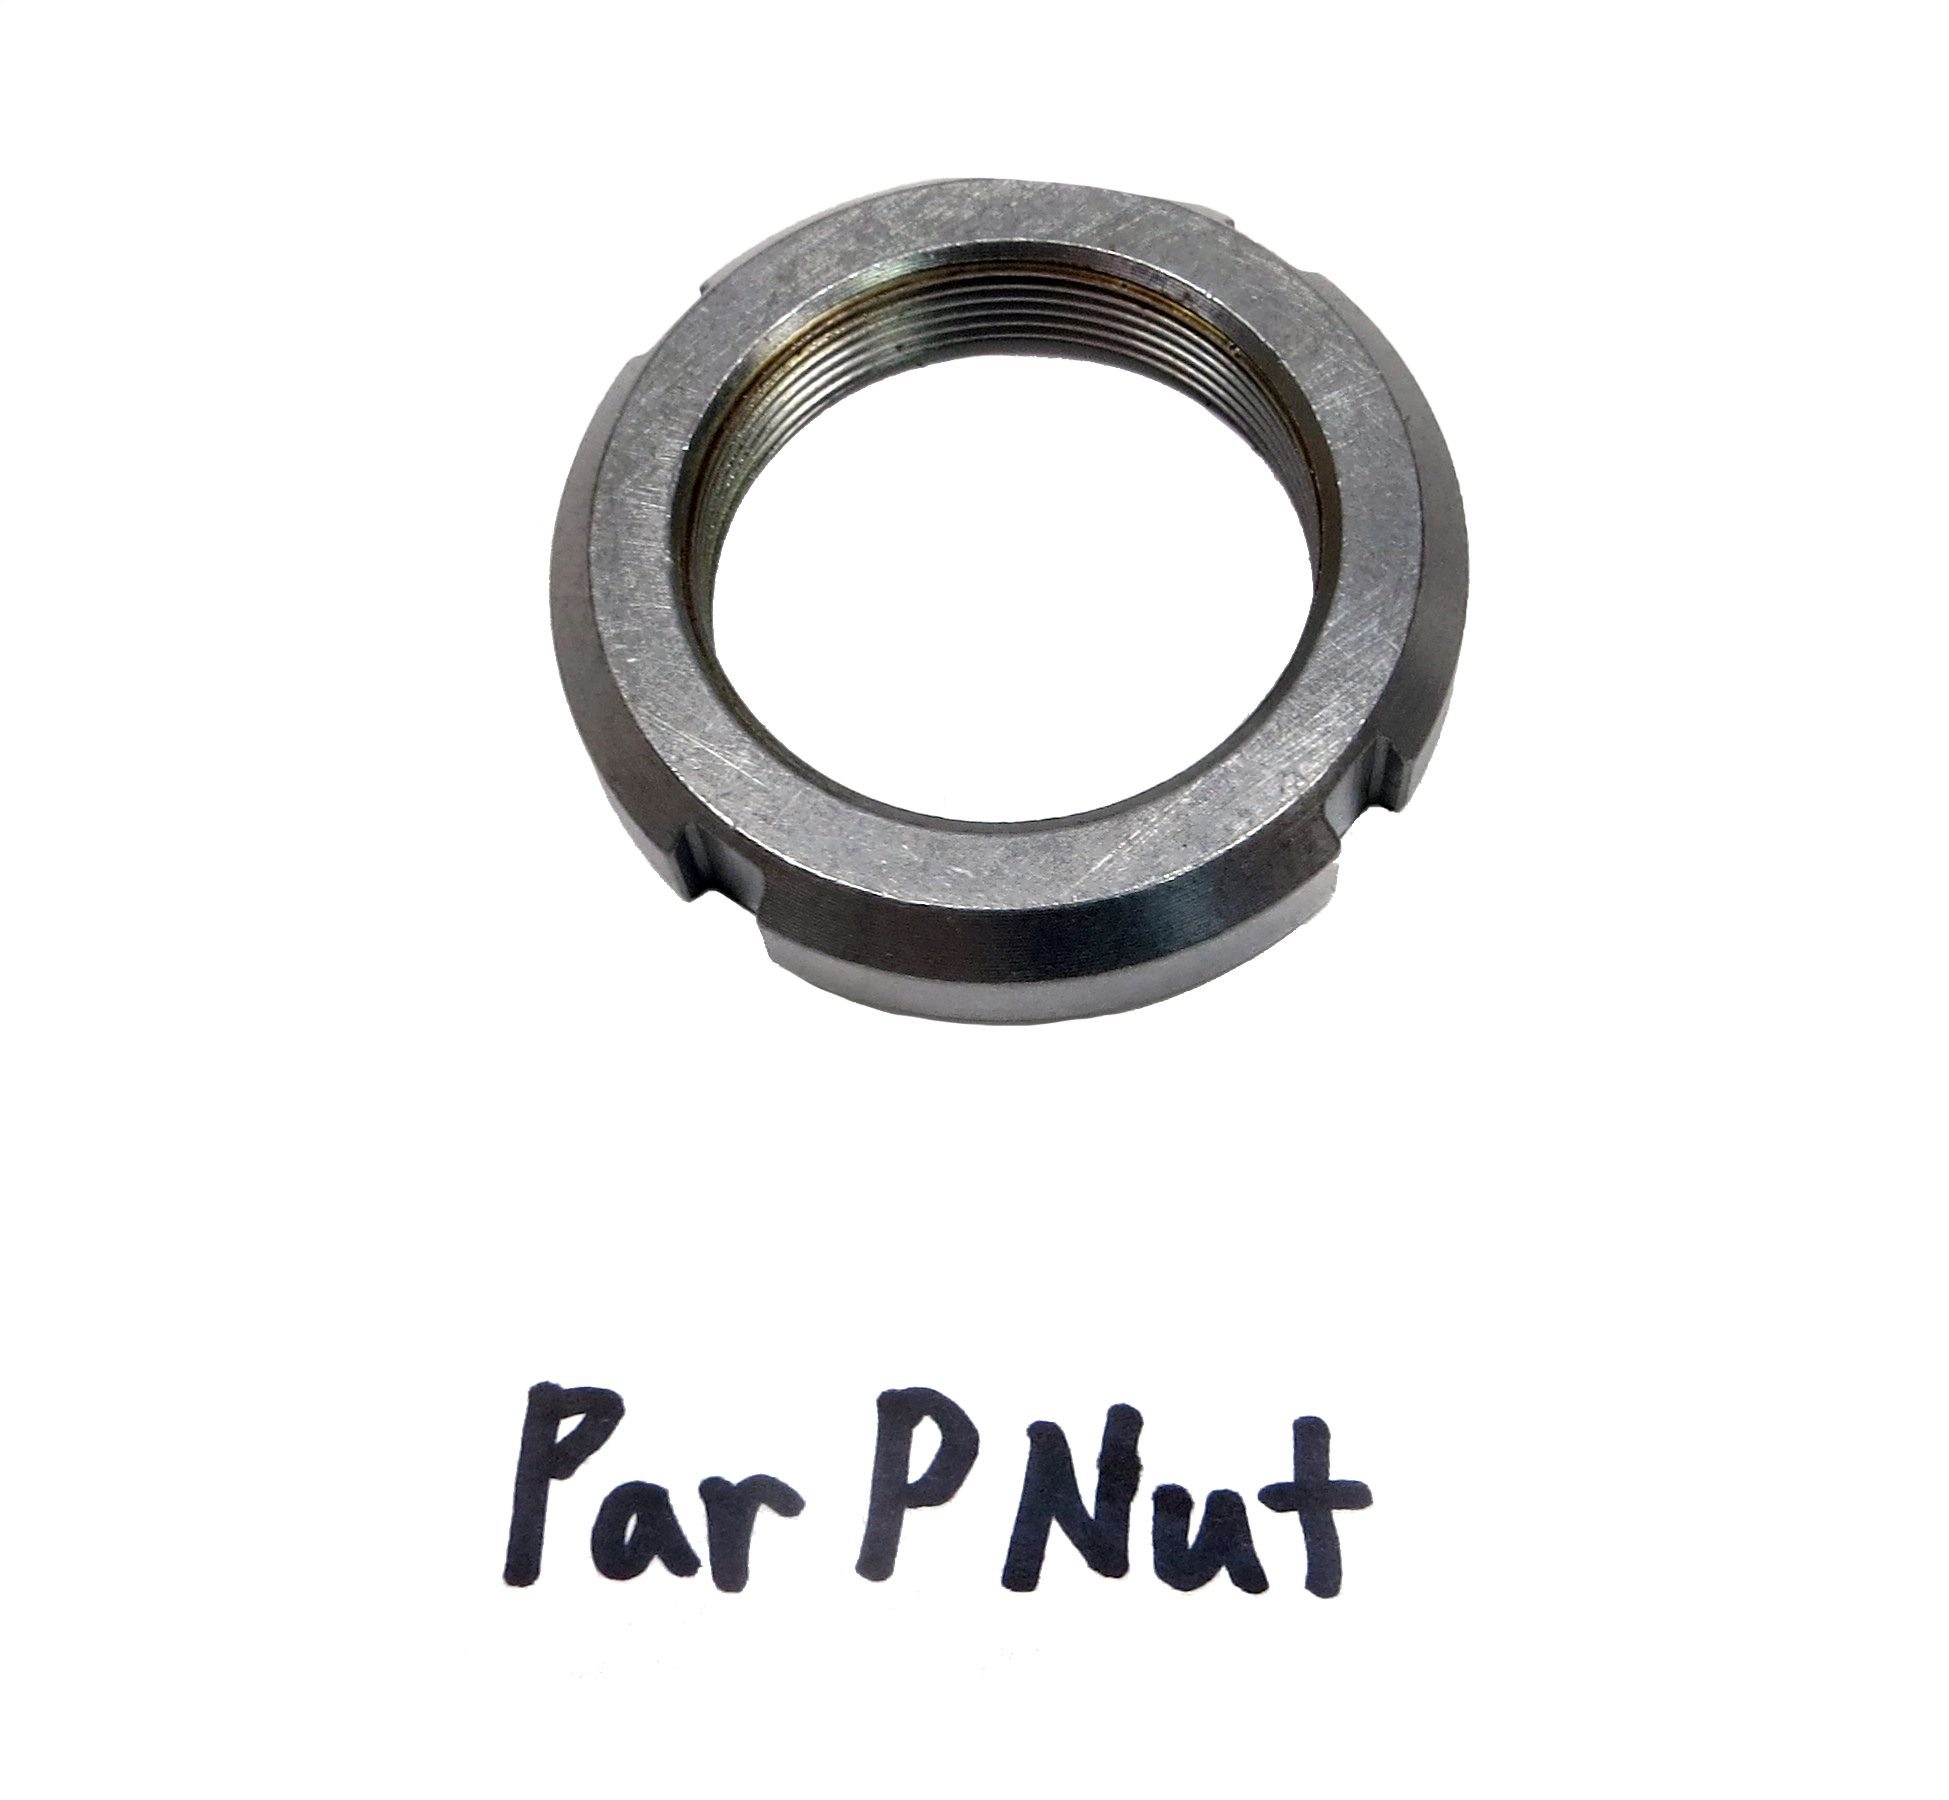 Paragon P Series Coupling Nut for Reduction Transmissions P32 P33 P34 P35